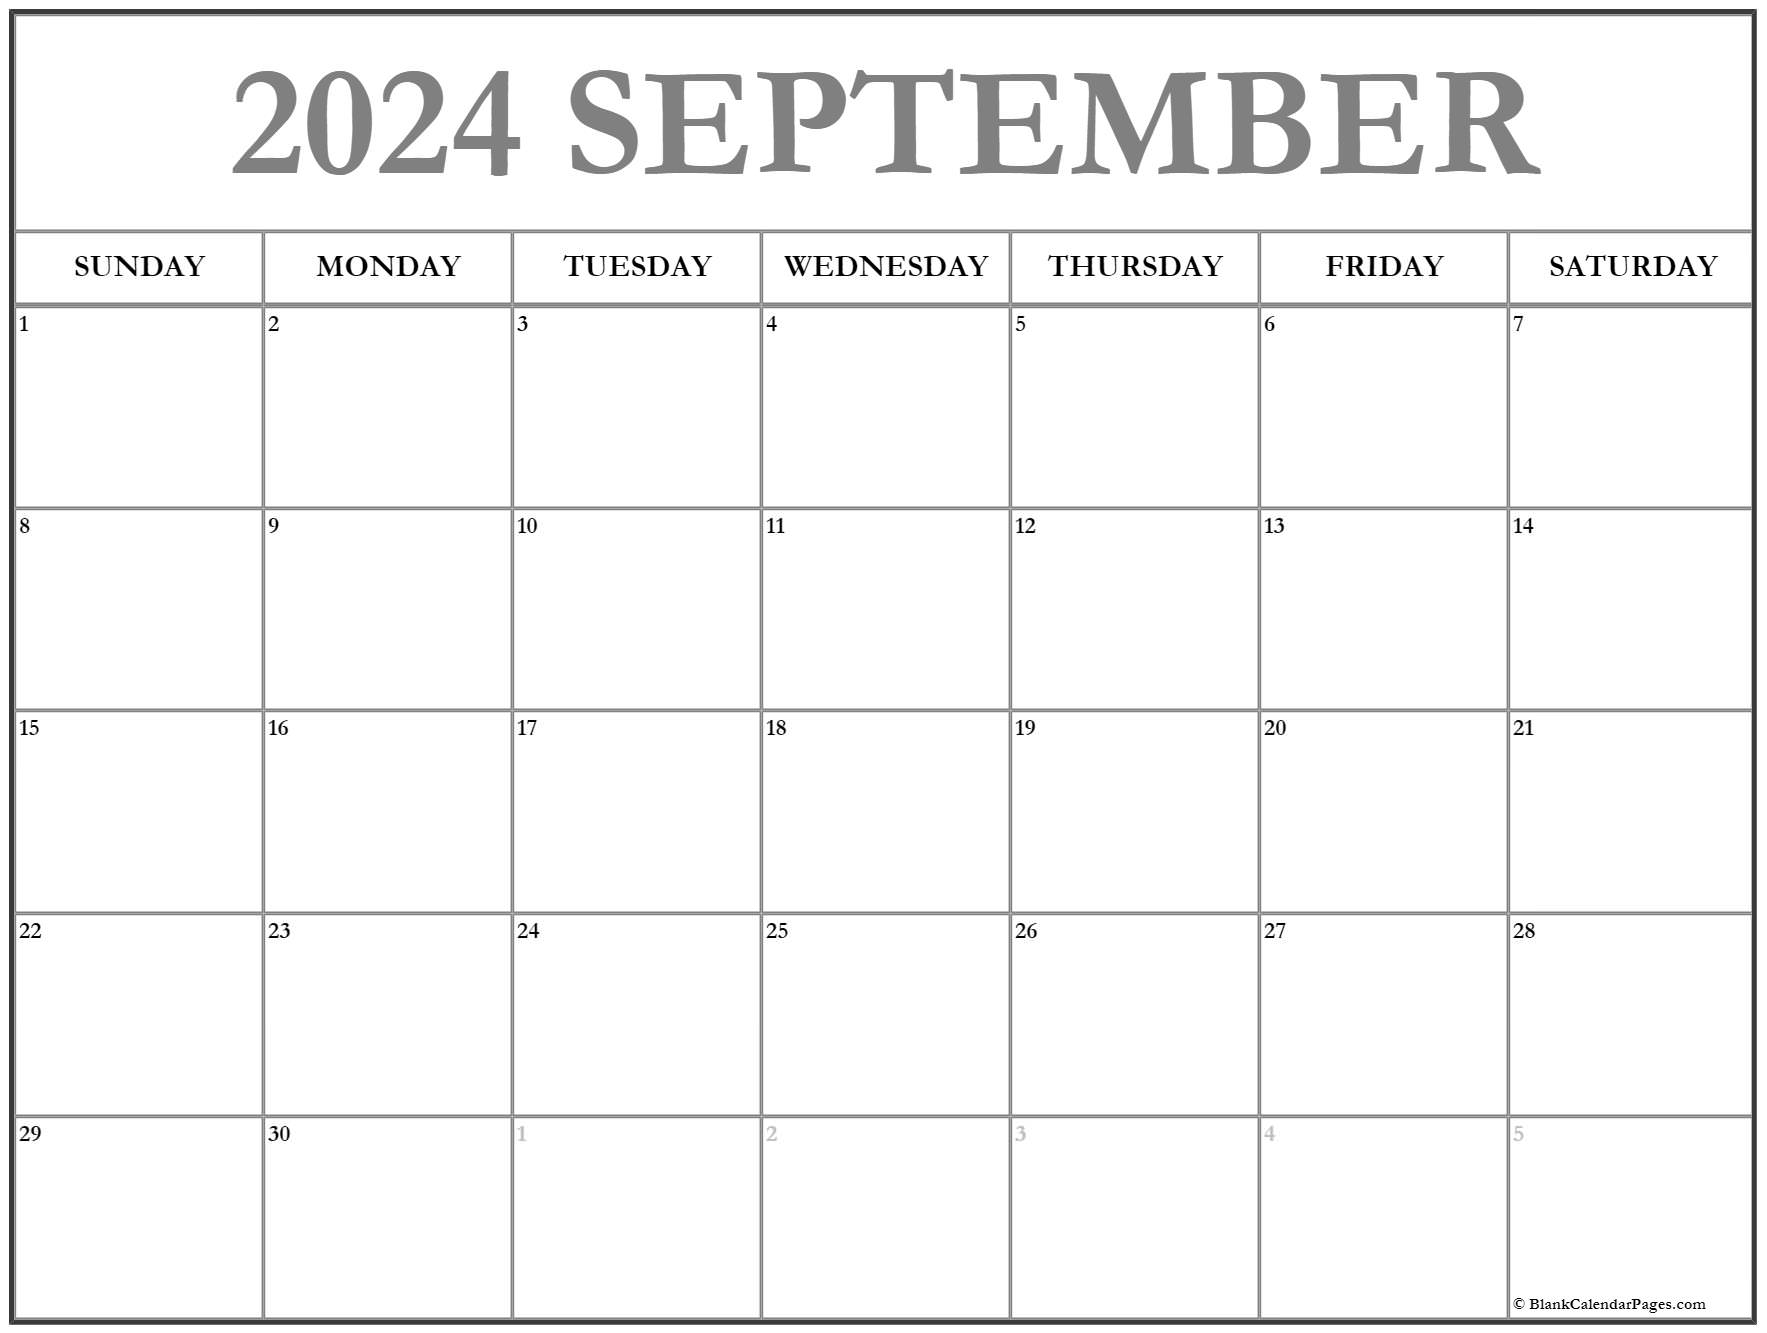 september-2018-calendar-56-templates-of-2018-printable-calendars